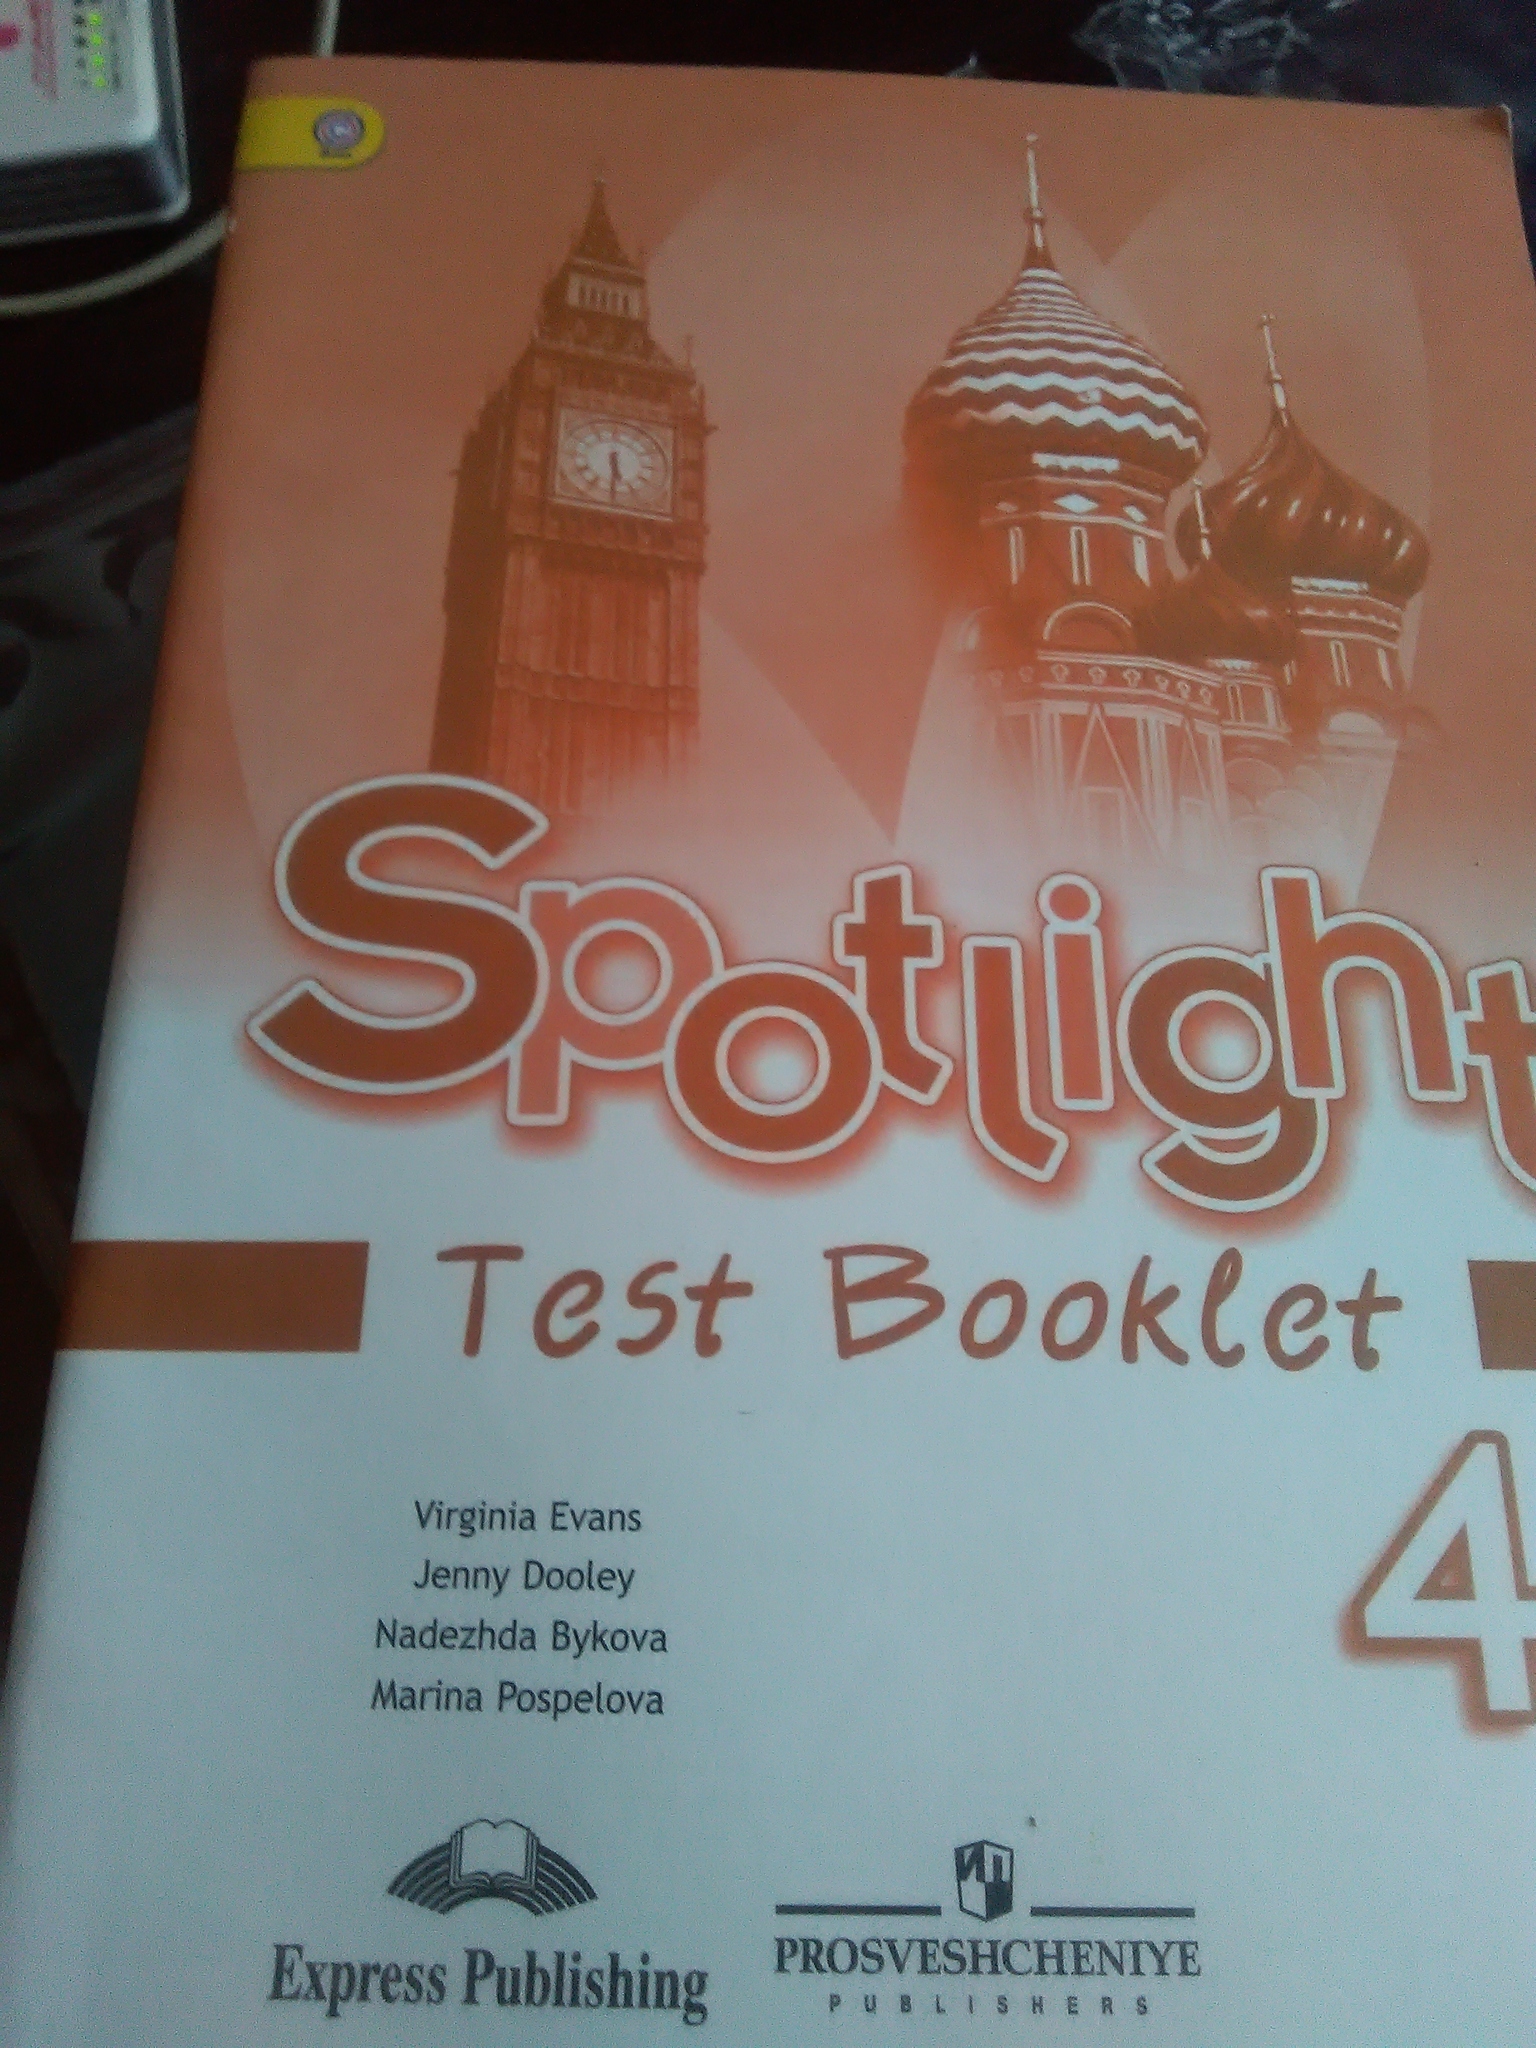 Английский 11 класс spotlight 2020. Спотлайт 4 класс тест буклет. Test booklet 4 класс Spotlight. Spotlight 4 Test booklet английский. Спотлайт 4 Test booklet.